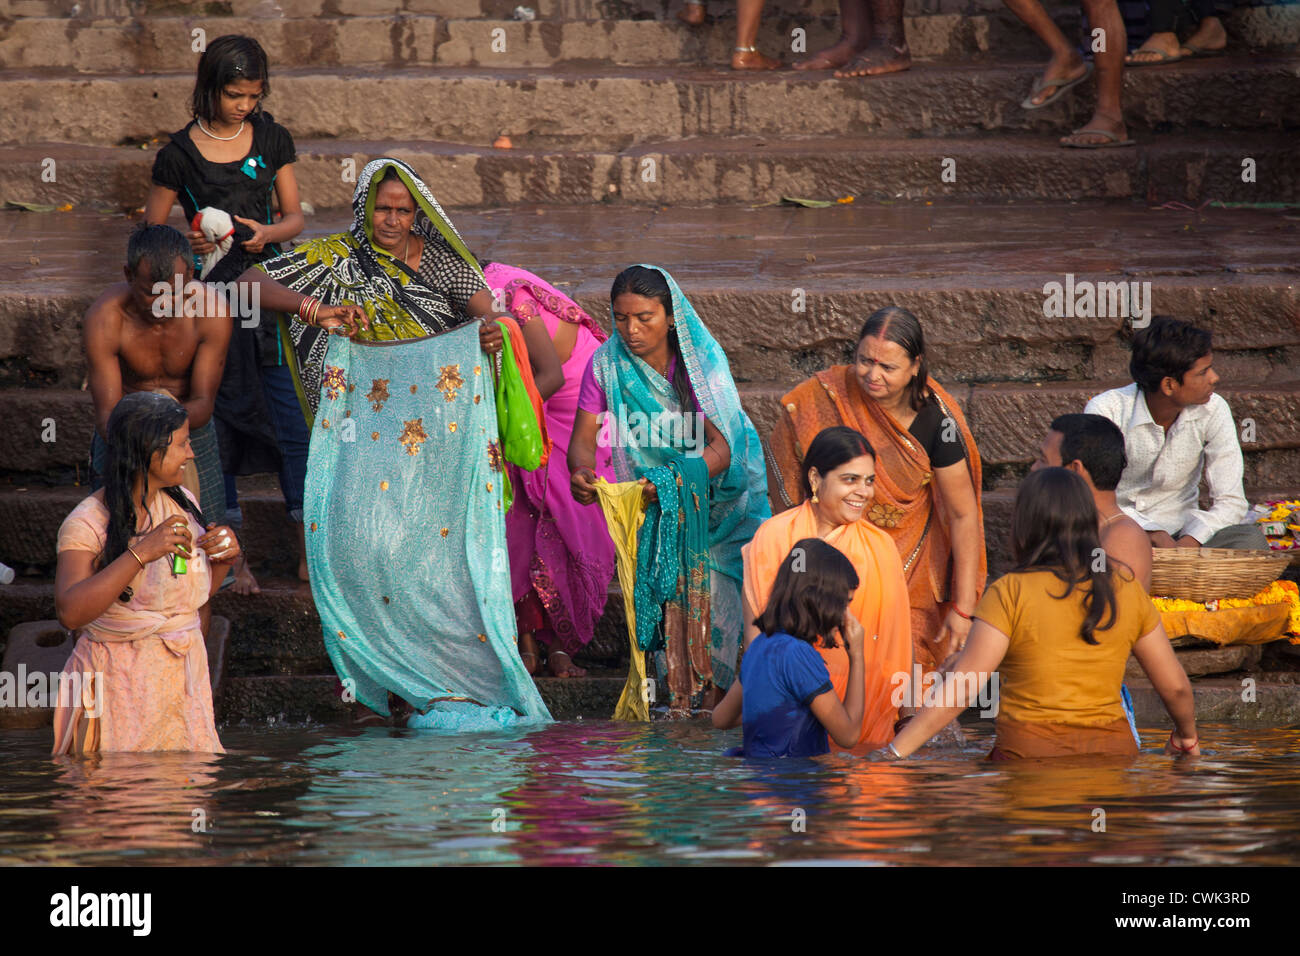 Le donne indiane di balneazione in acque inquinate del fiume Gange a Varanasi, Uttar Pradesh, India Foto Stock